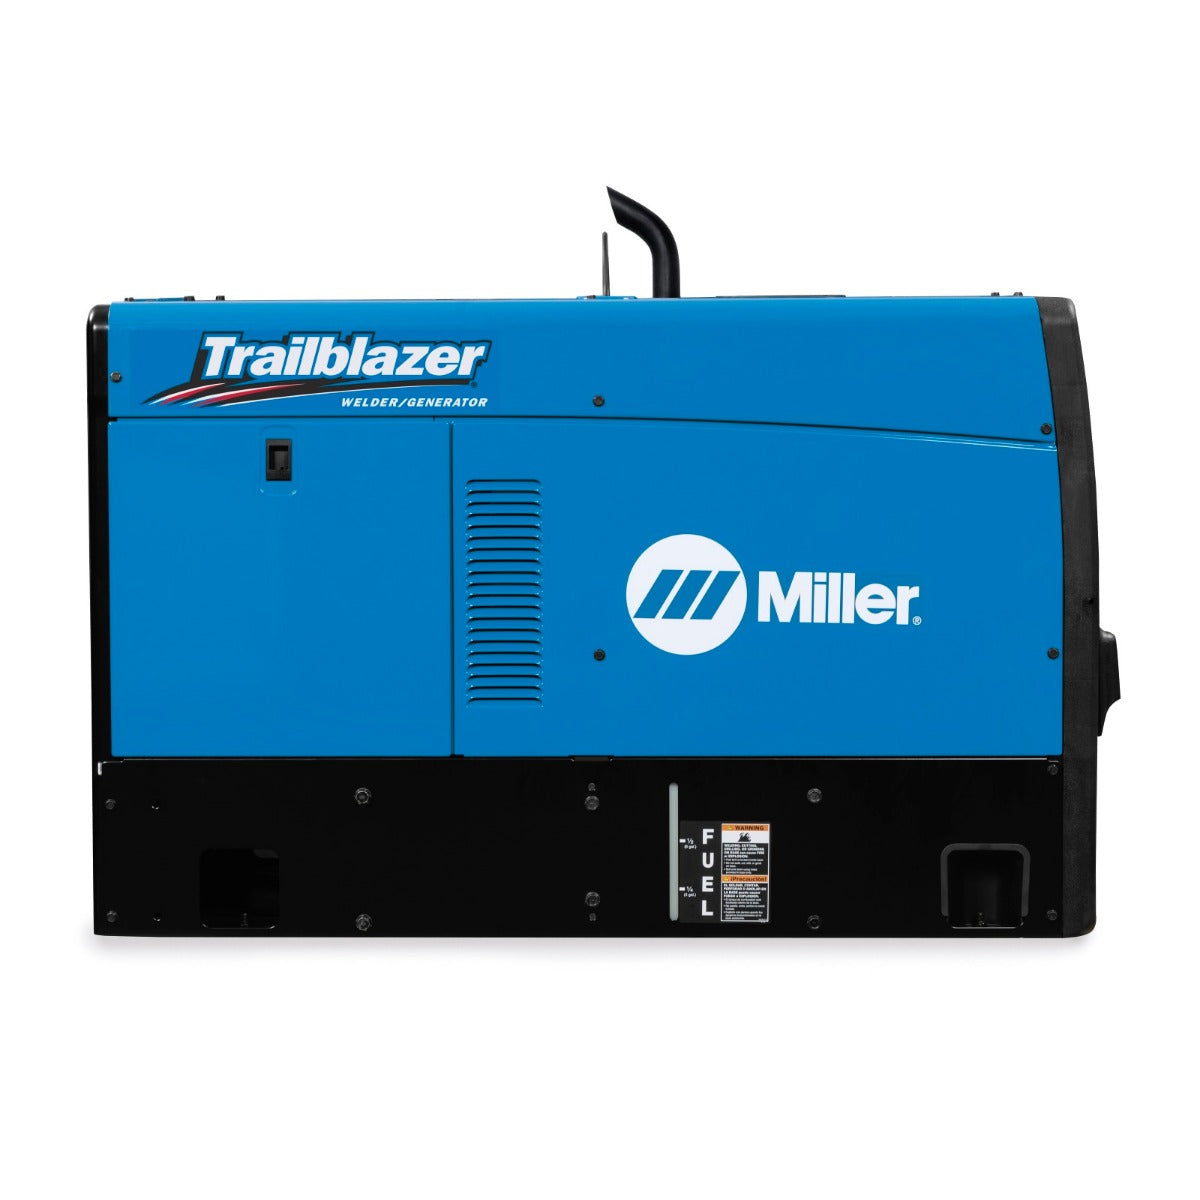 Miller Trailblazer 325 Kubota Diesel Generator w/GFCI and ArcReach - 907799001